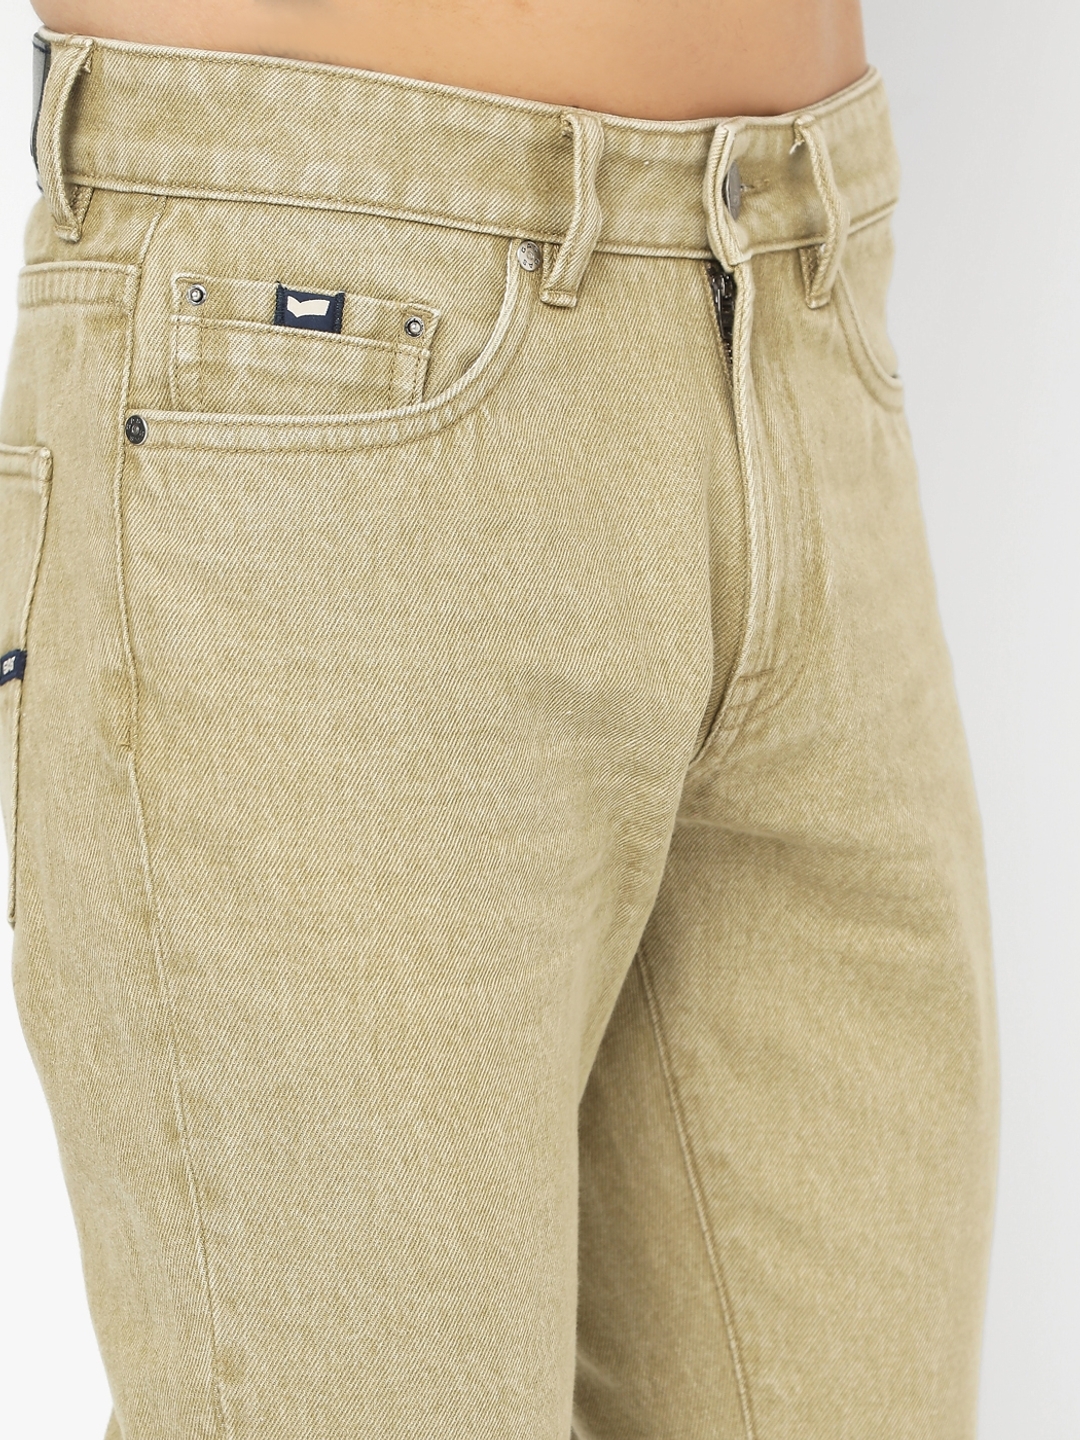 Trousers for Men: Buy Pants for Men Online in India | Cottonworld